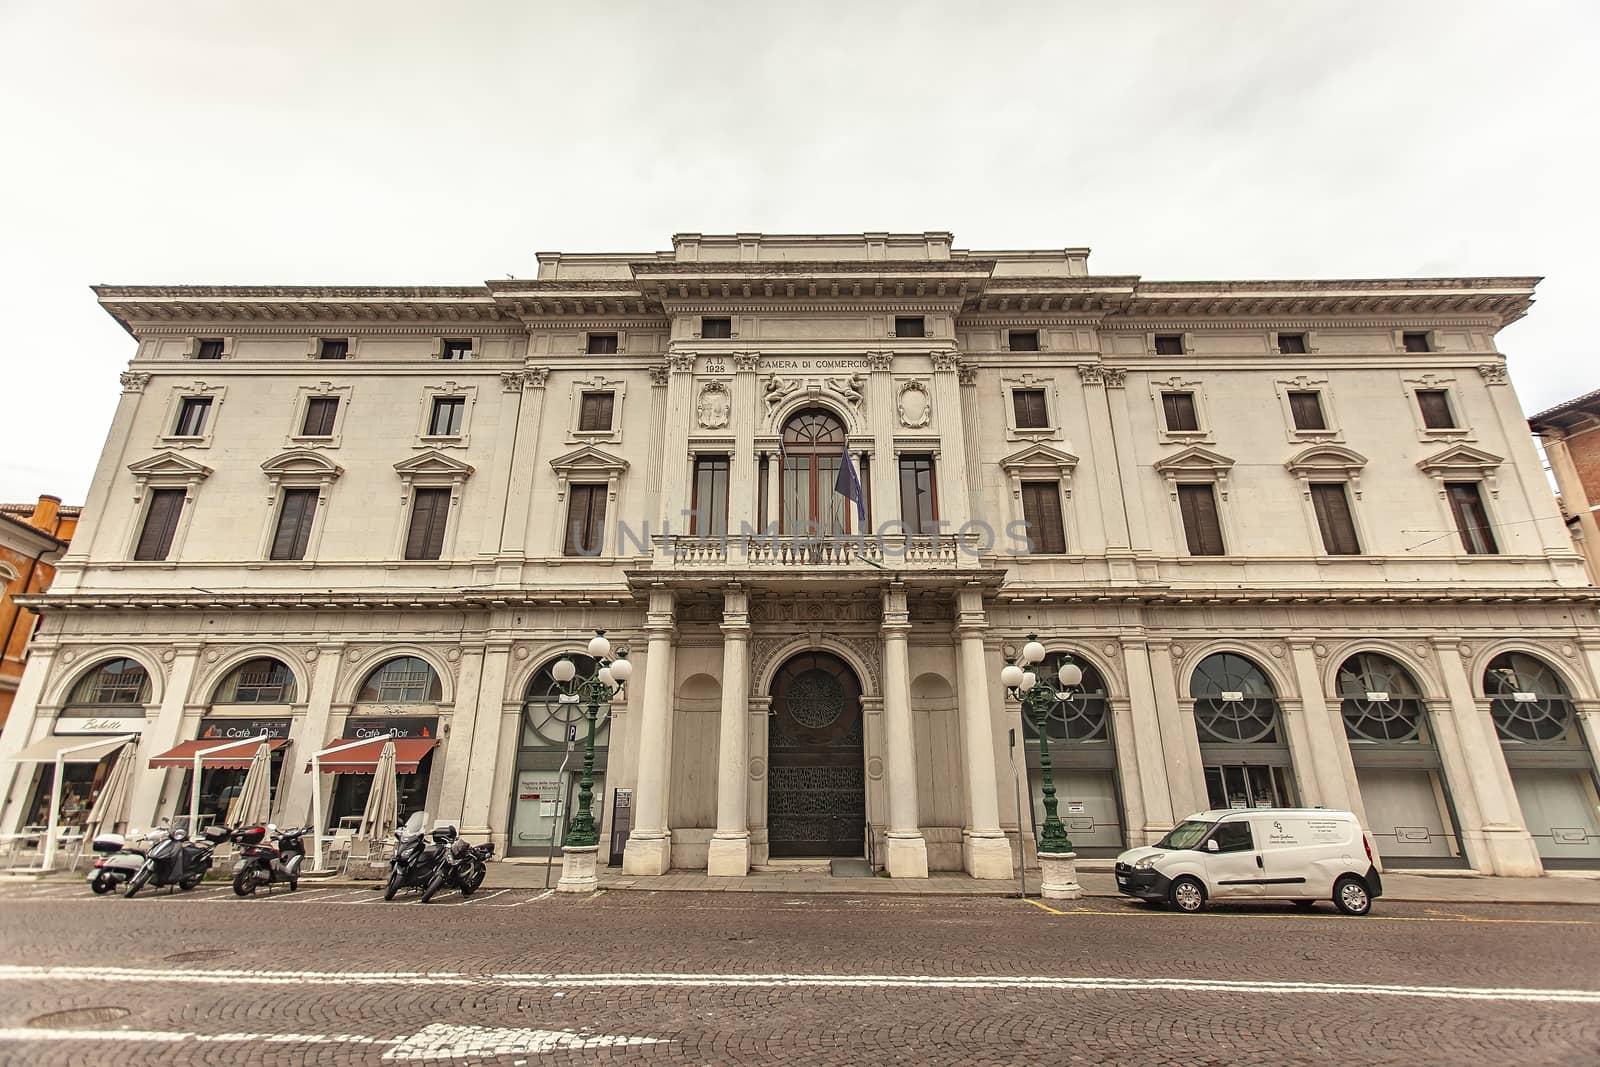 FERRARA, ITALY 29 JULY 2020 : Camera di commercio building facade detail in Ferrara in Italy